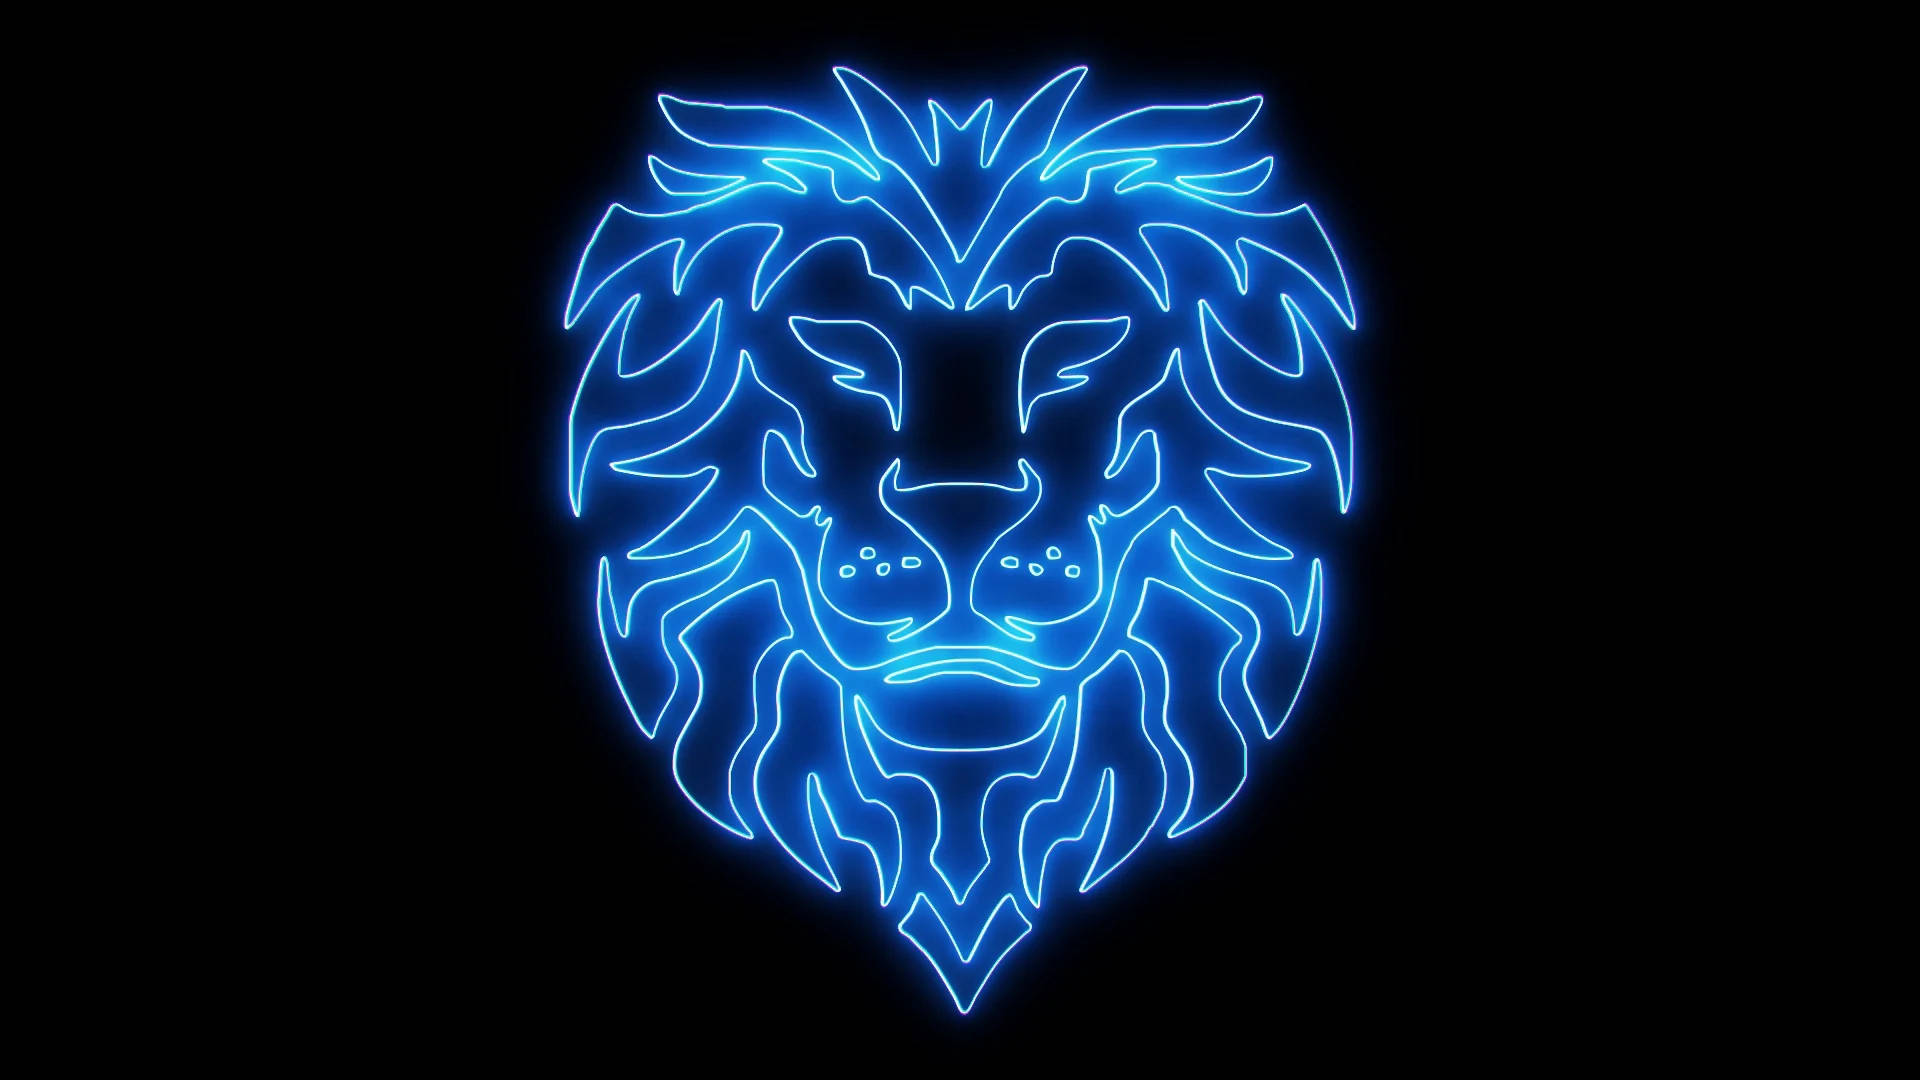 Download Lion - Lion Logo Blue PNG Image with No Background - PNGkey.com